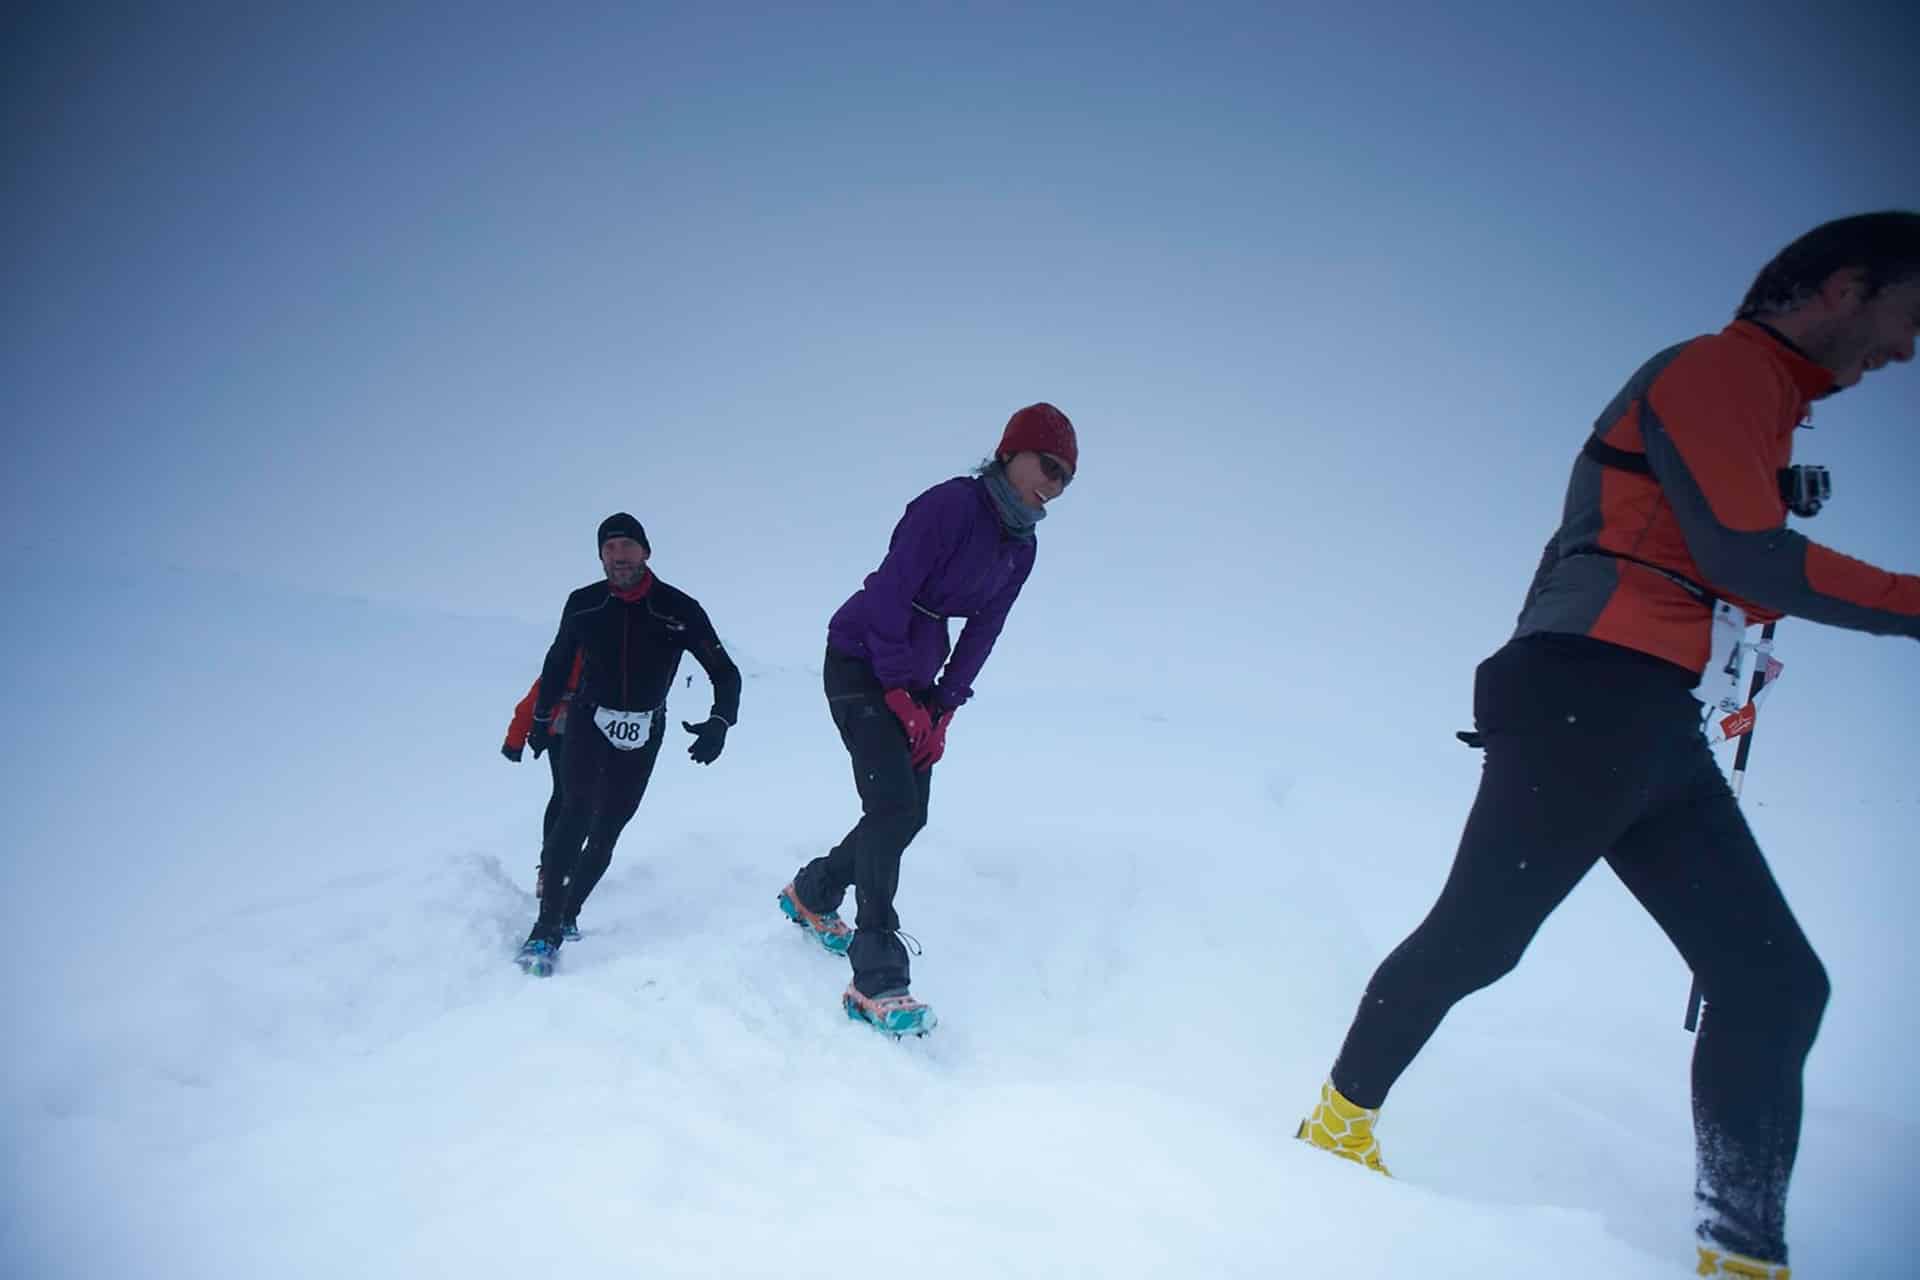 Polar circle marathon participants in snow. By Visit Greenland